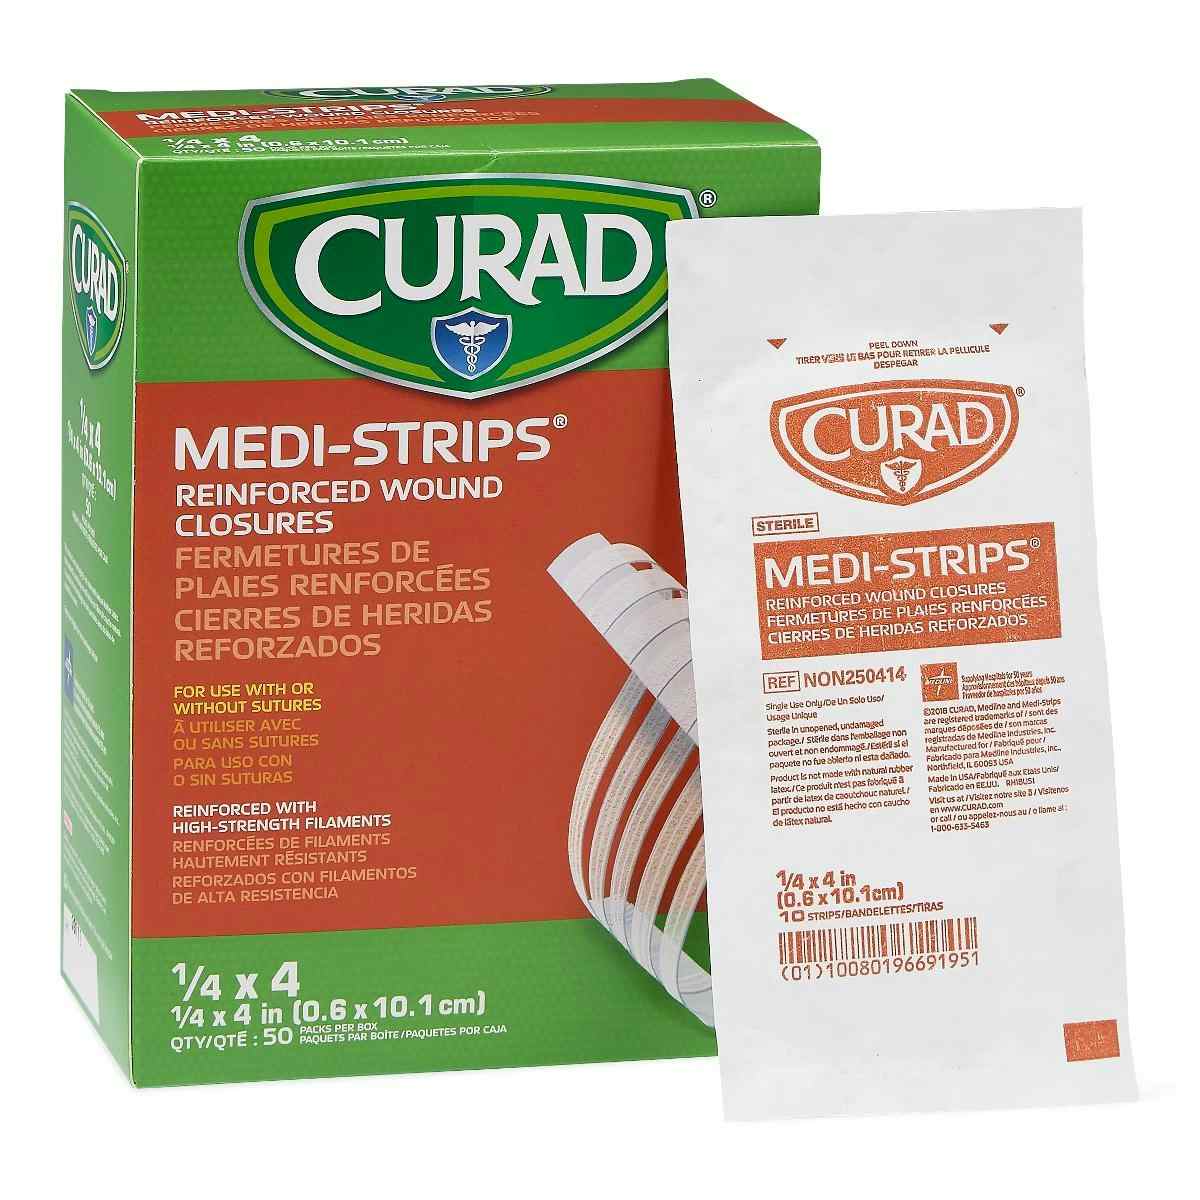 Curad Medi-Strip Reinforced Wound Closures, NON250414Z, 1/4" X 4" - Box of 500